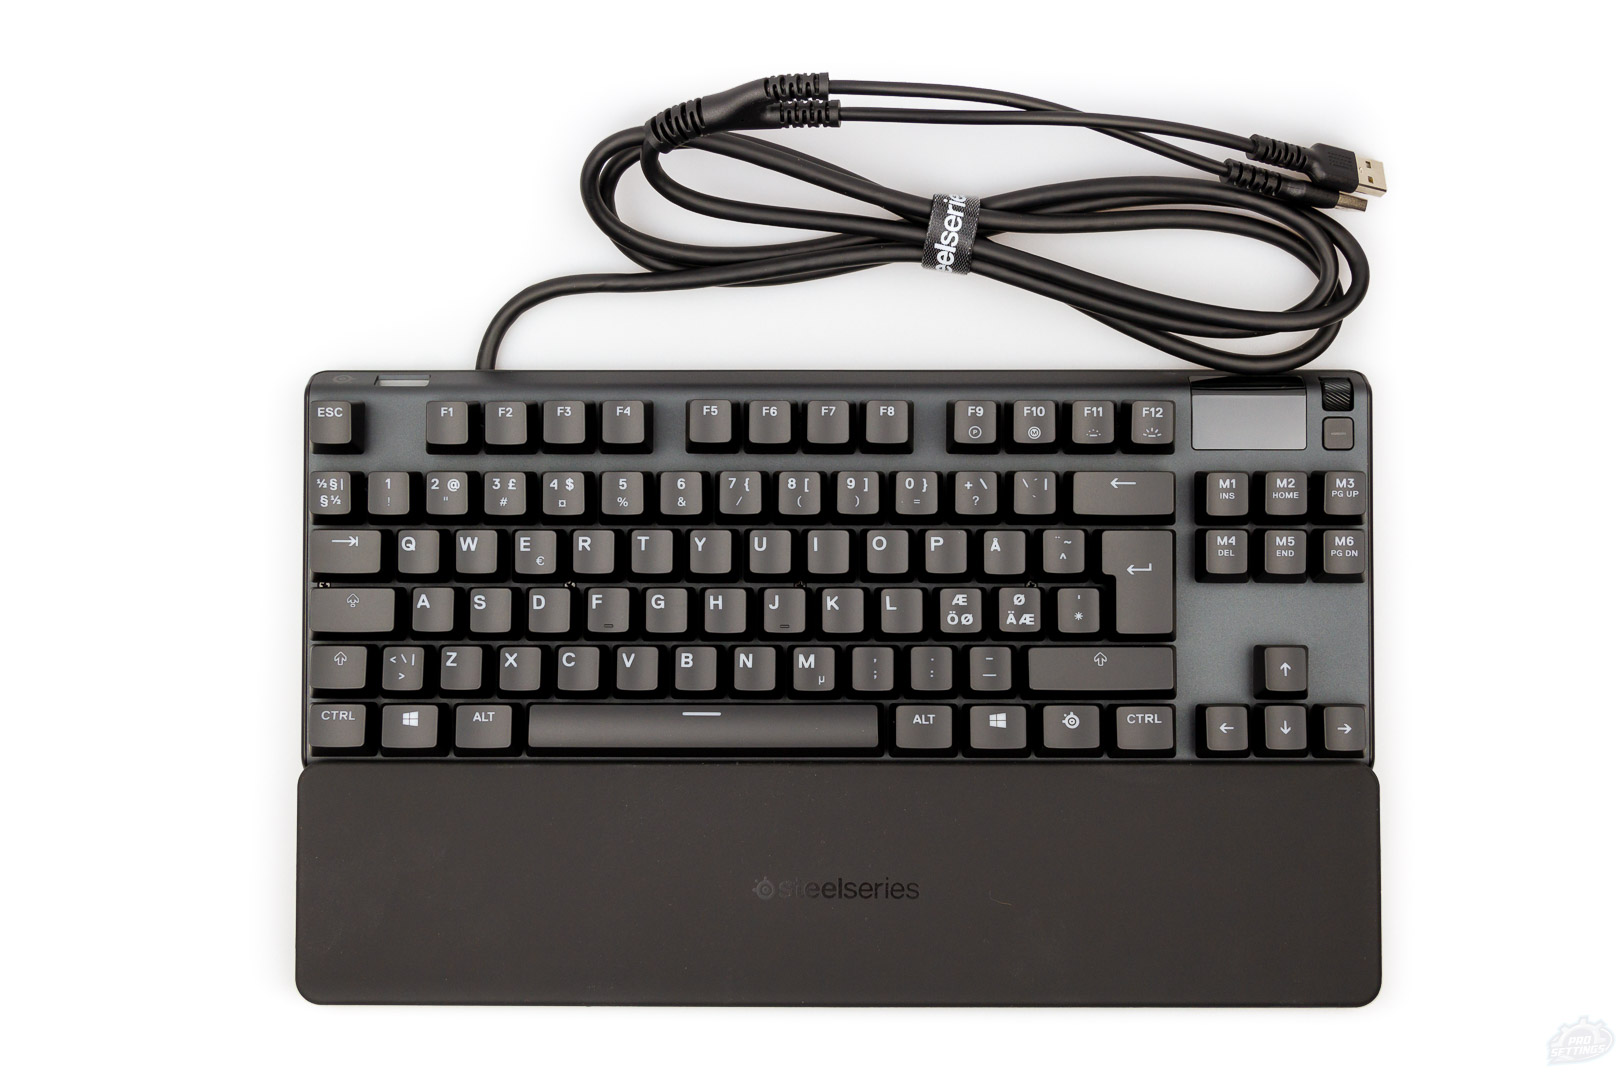 Steelseries Apex Pro Tkl Mechanical Gaming Keyboard Review Prosettings Com